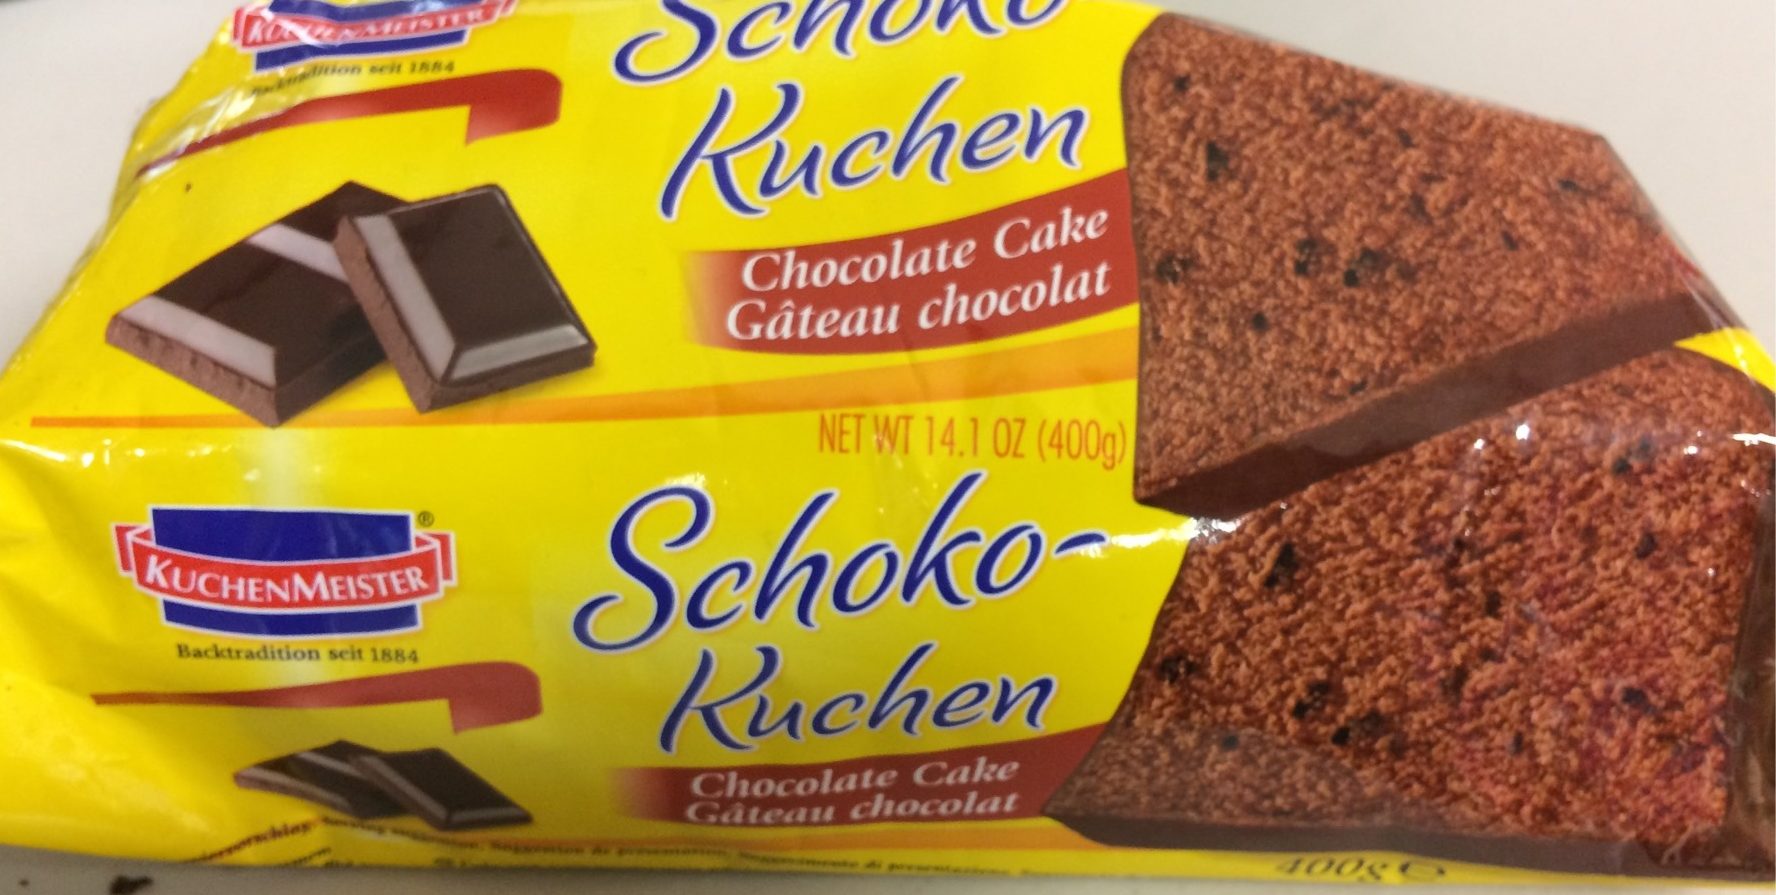 Schoko-Kuchen - Gâteau au Chocolat - Product - fr